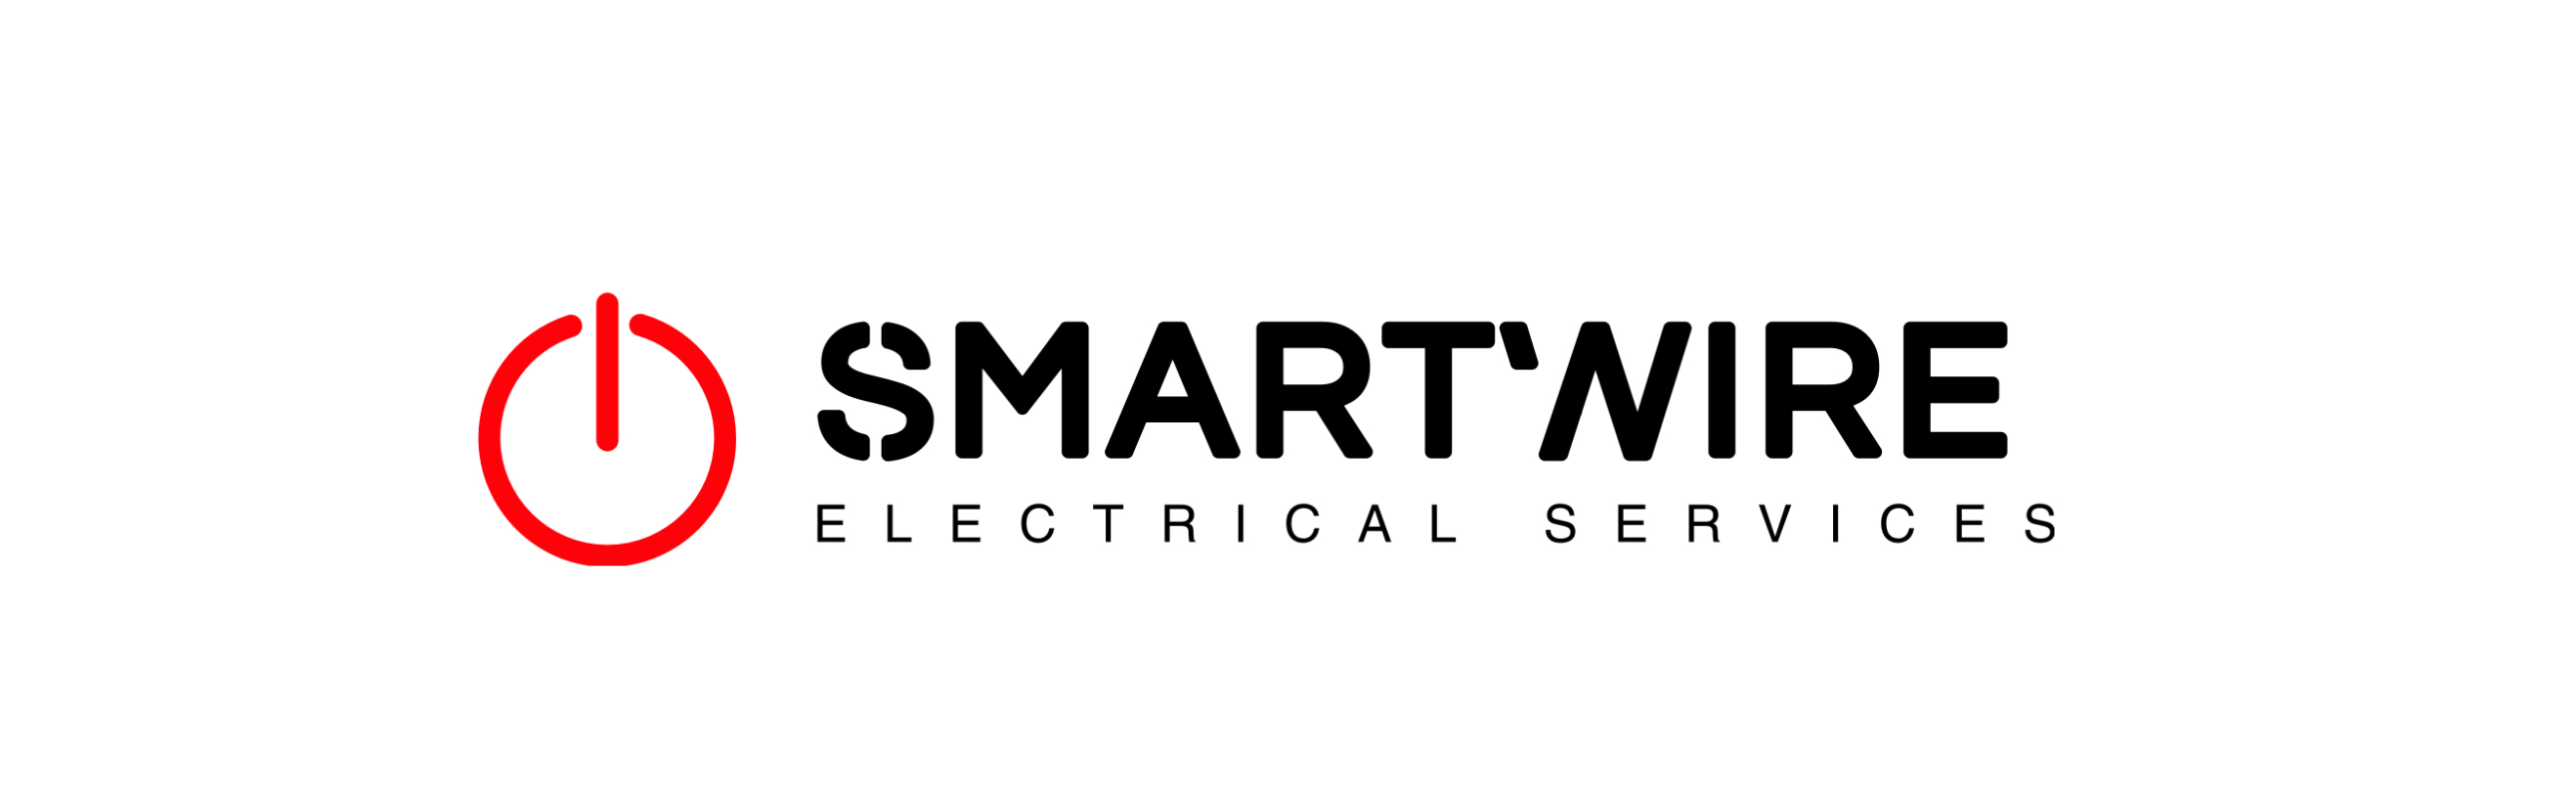 SmartWire Logo